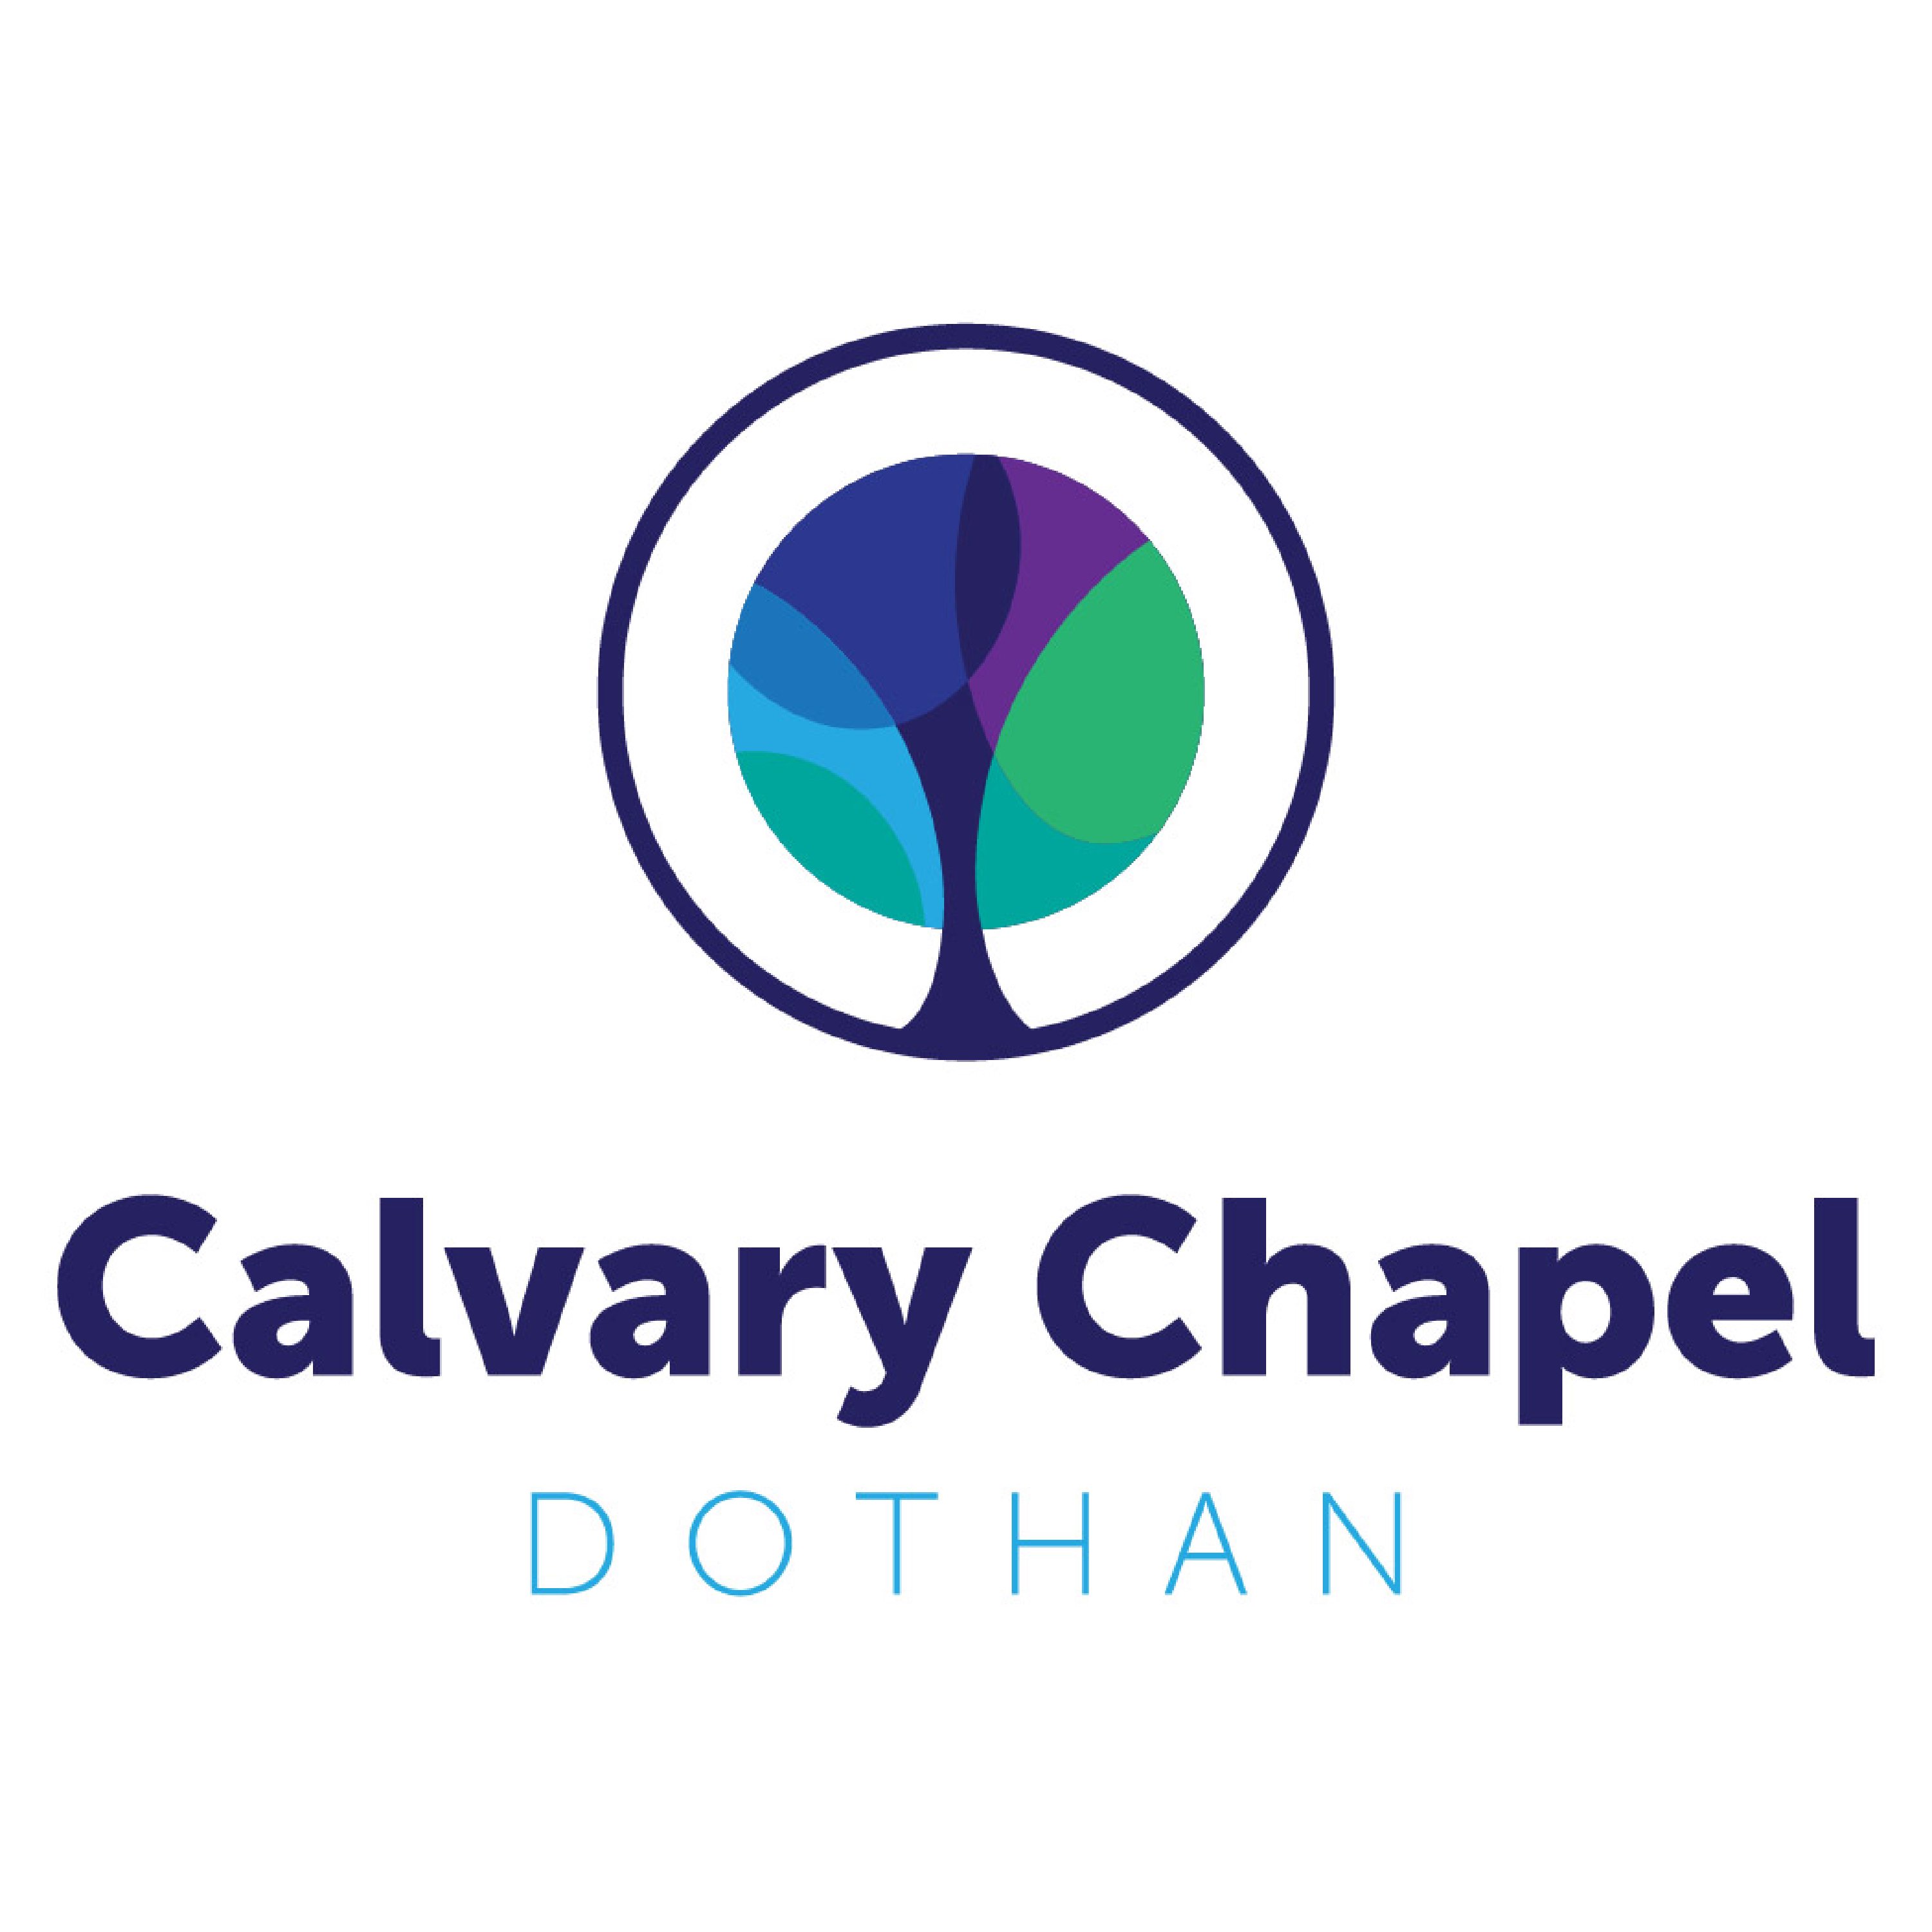 Calvary Chapel Dothan